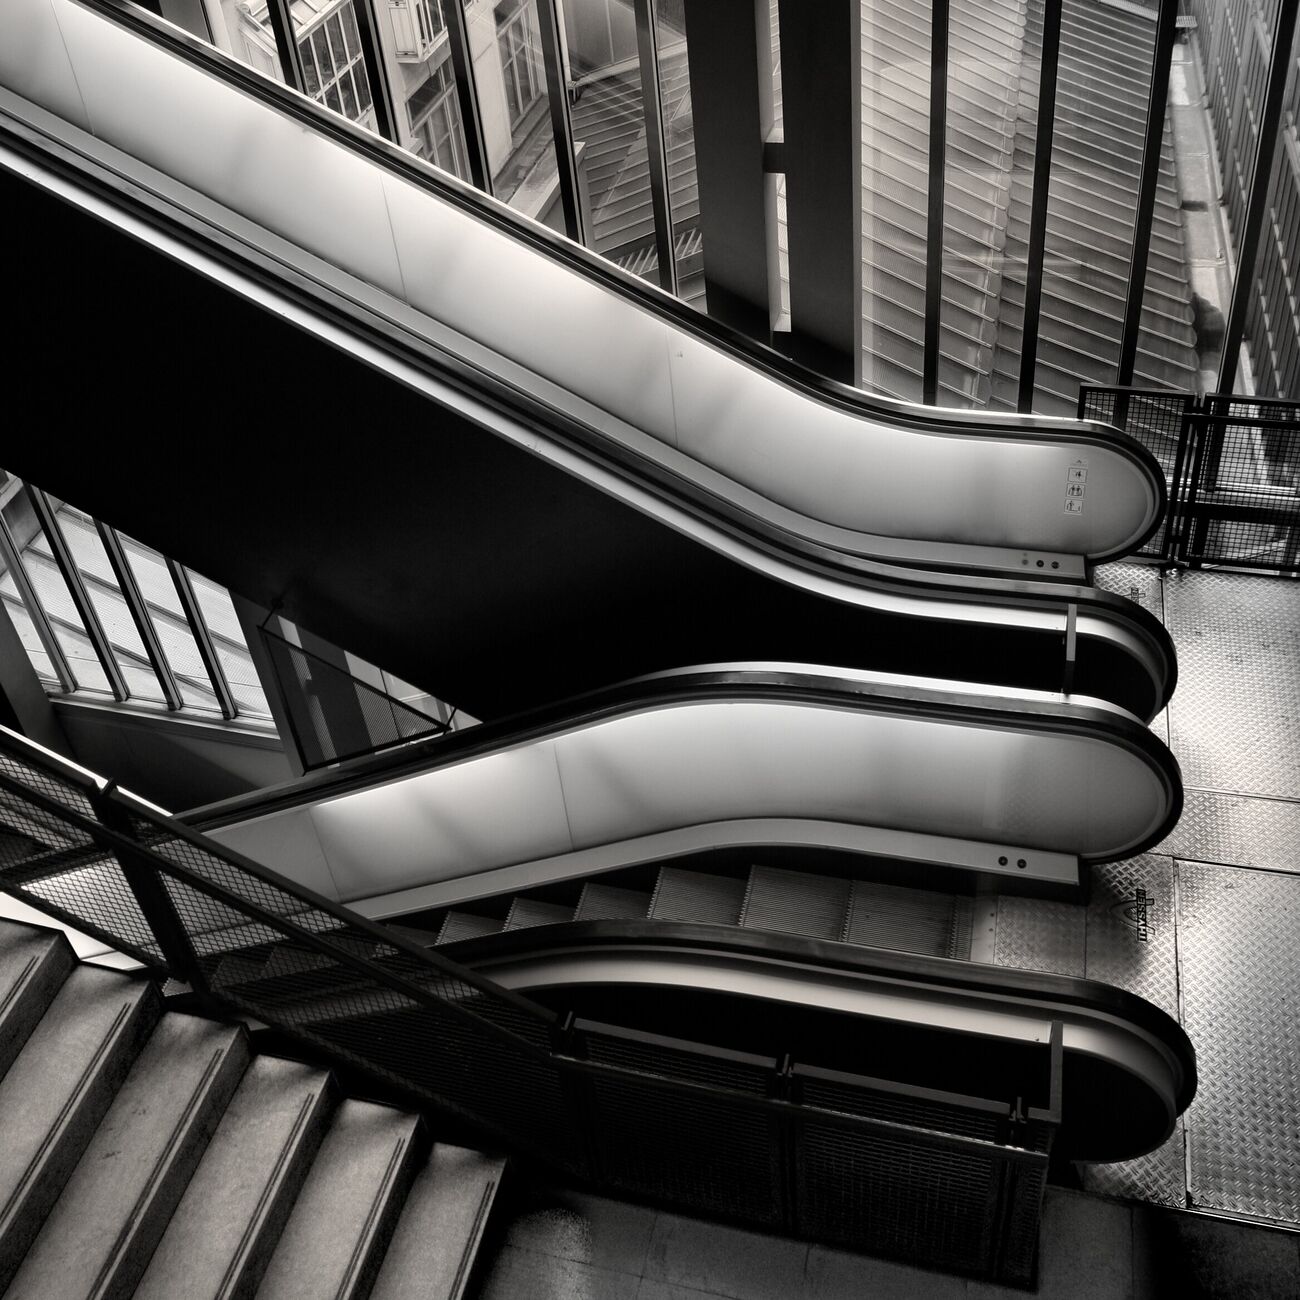 Tirage photographique 40 x 40 cm, Orsay museum escalator. Ref-564-12 - Denis Olivier Photographie